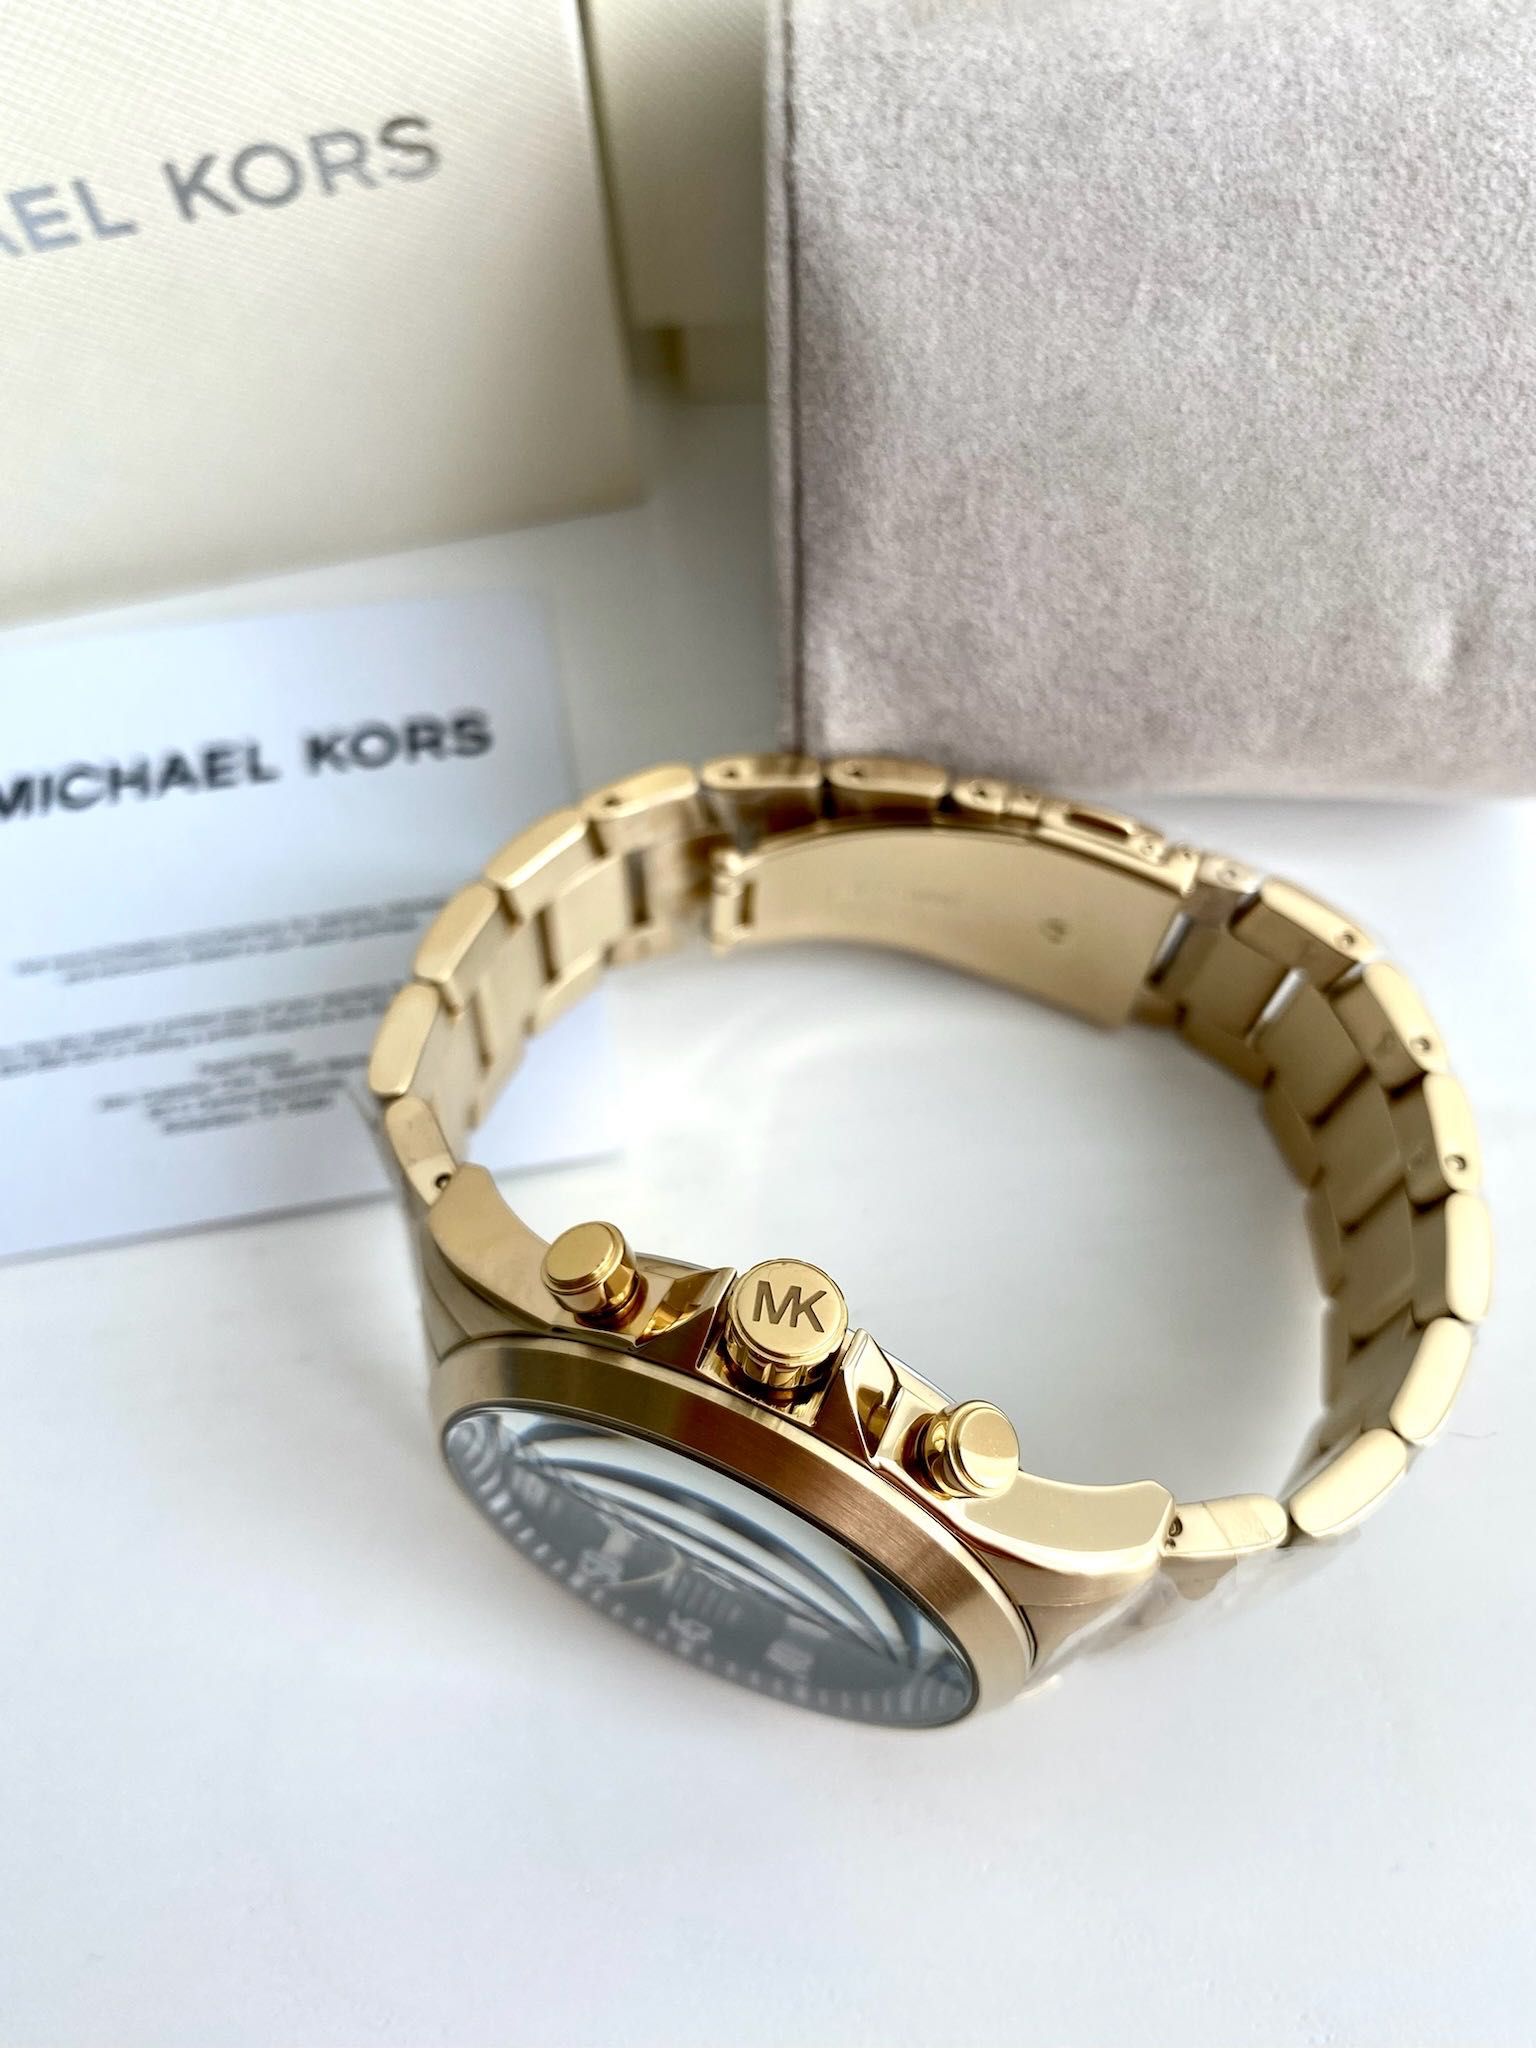 MICHAEL KORS Годинник майкл корс оригінал мужские часы оригинал